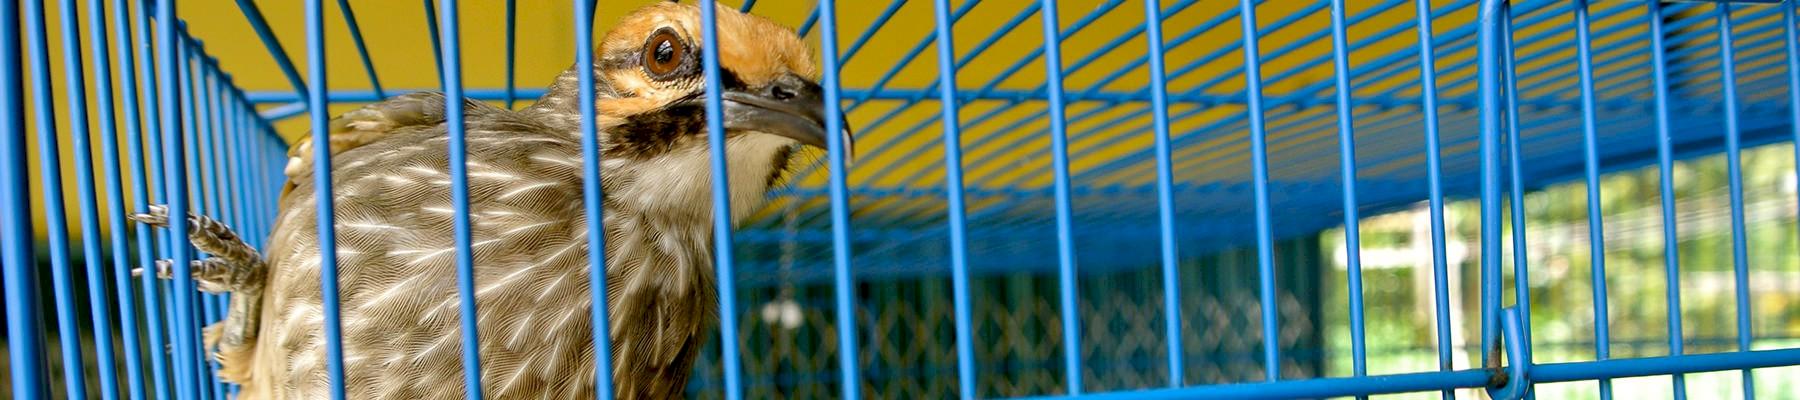 Straw-headed Bulbul: over-exploited for the songbird trade © TRAFFIC